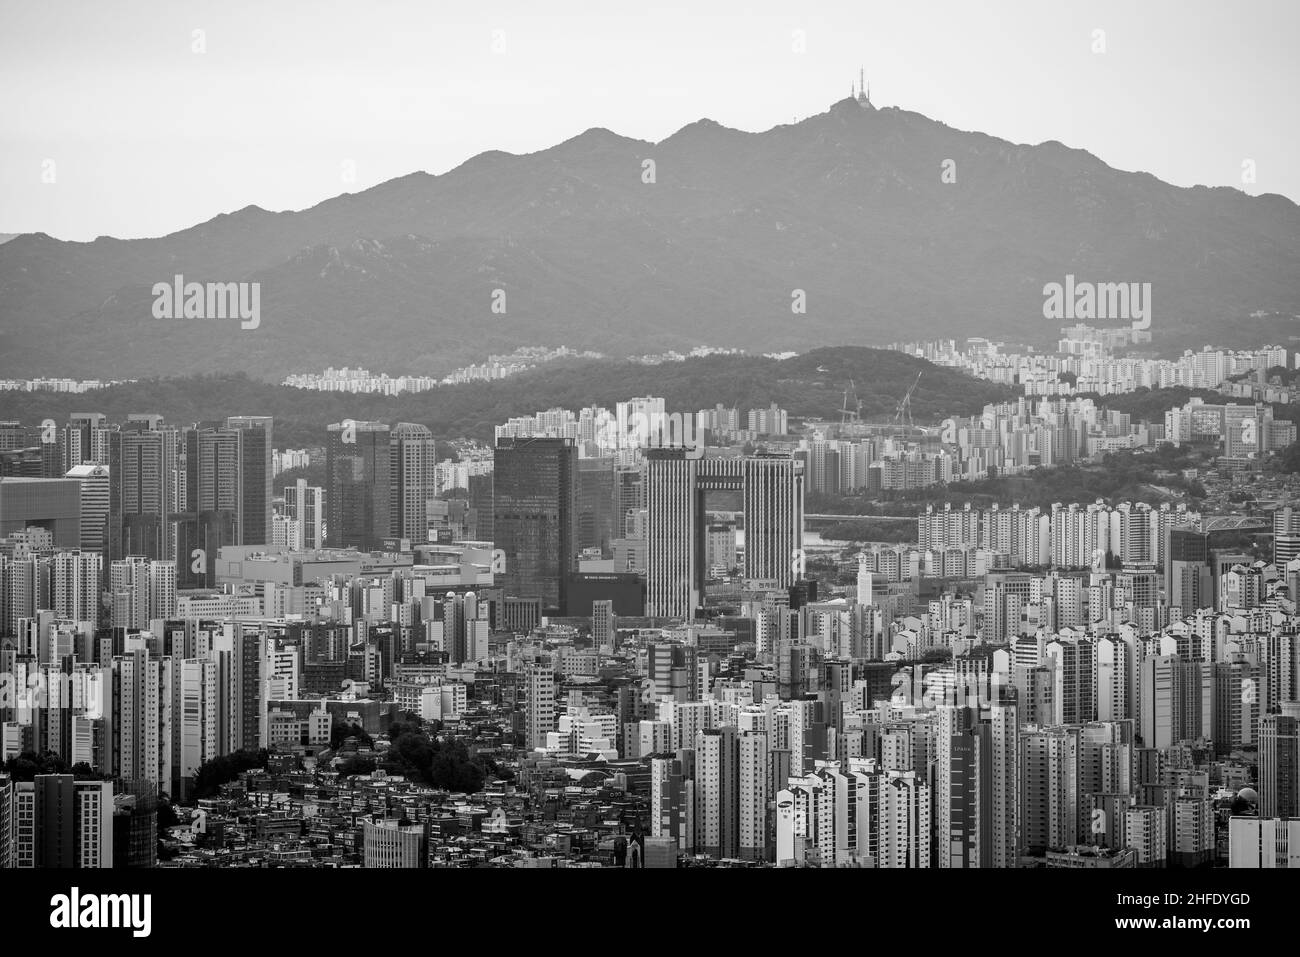 Seoul South Korea cityscape view from Inwangsan mountain on September 19, 2021 Stock Photo